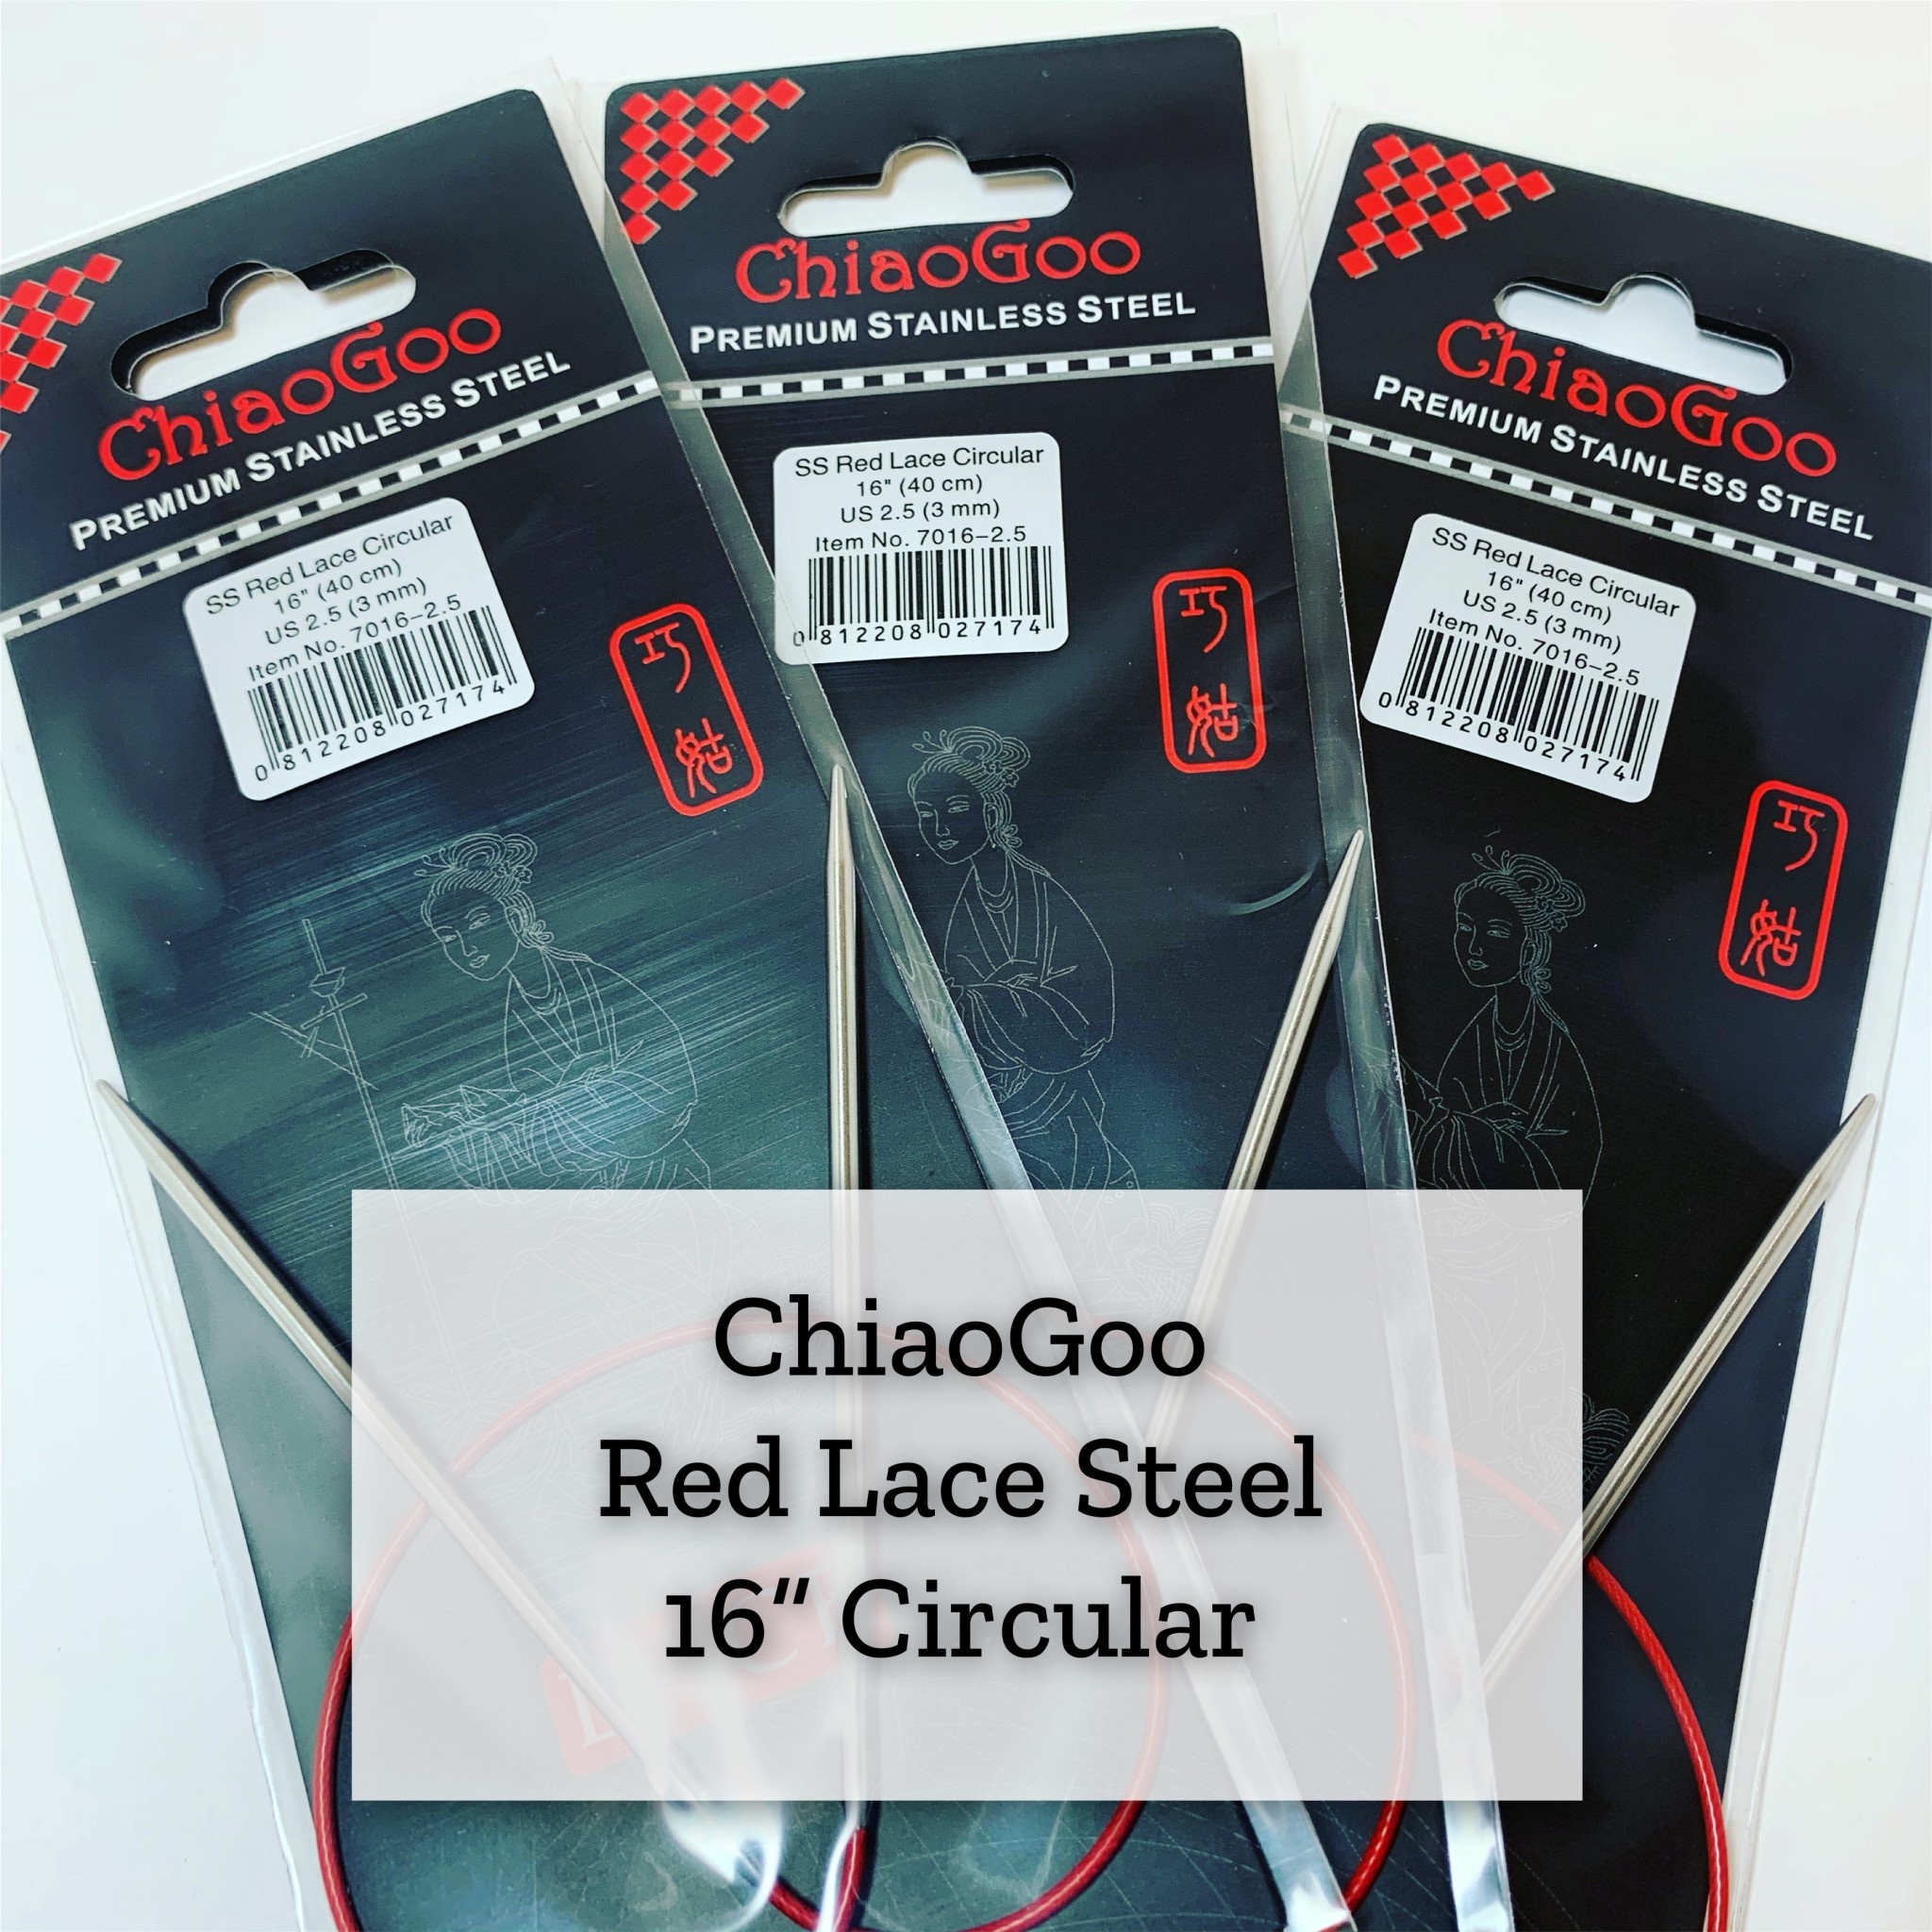 ChiaoGoo Red Lace Steel - 16" 3.5 mm